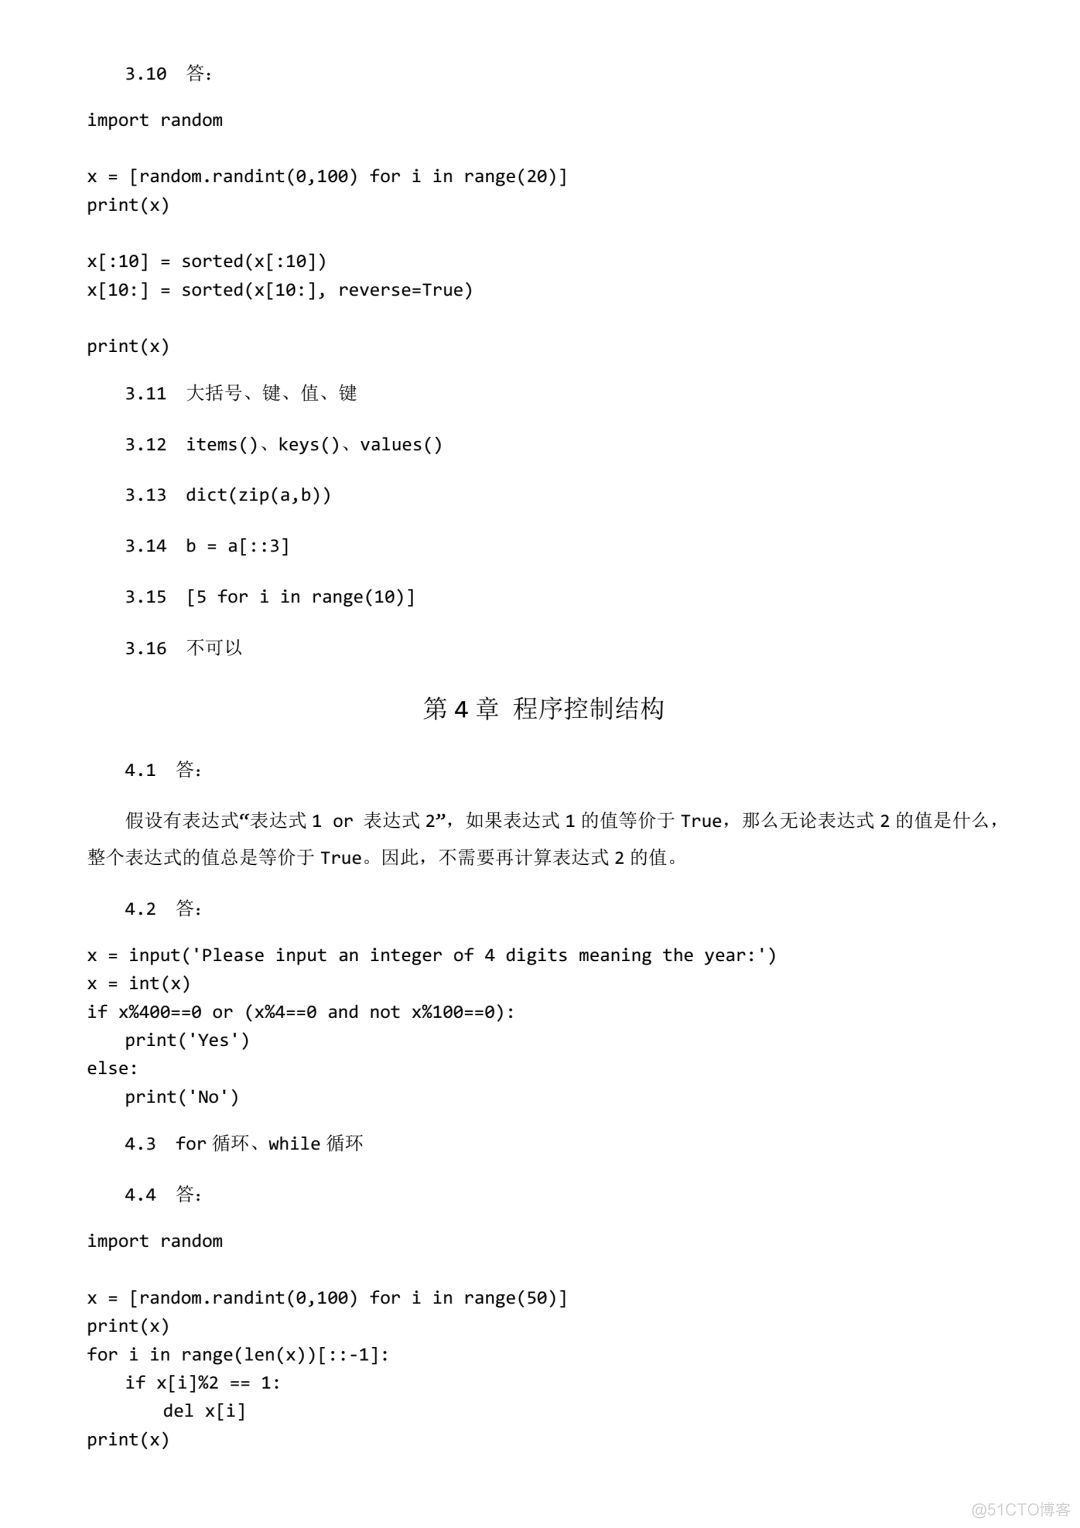 《Python程序设计基础（第2版）》习题答案_编程语言_04